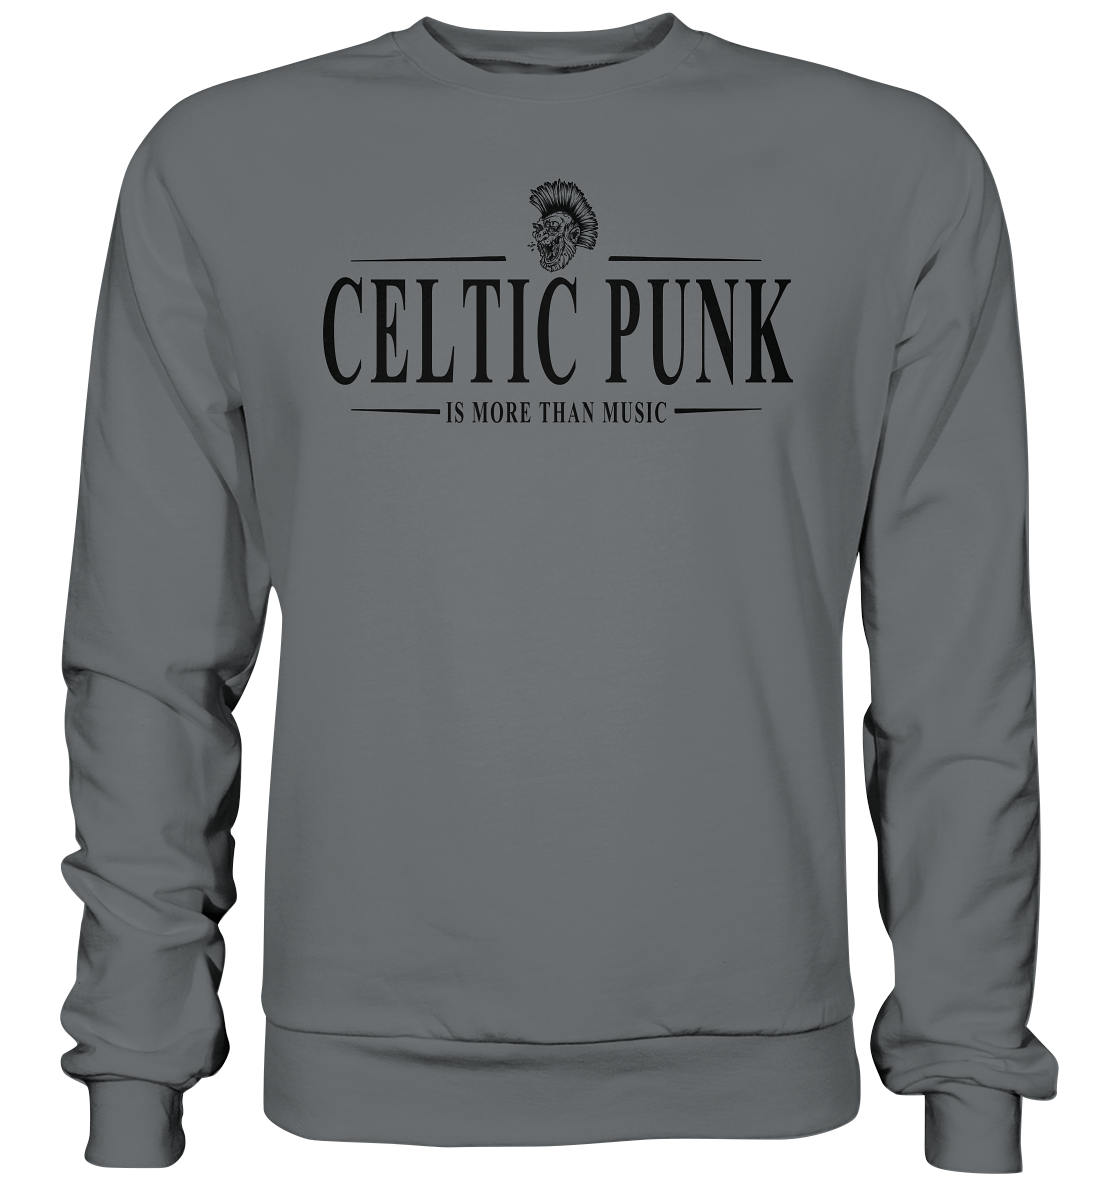 Celtic Punk "Is More Than Music" - Basic Sweatshirt